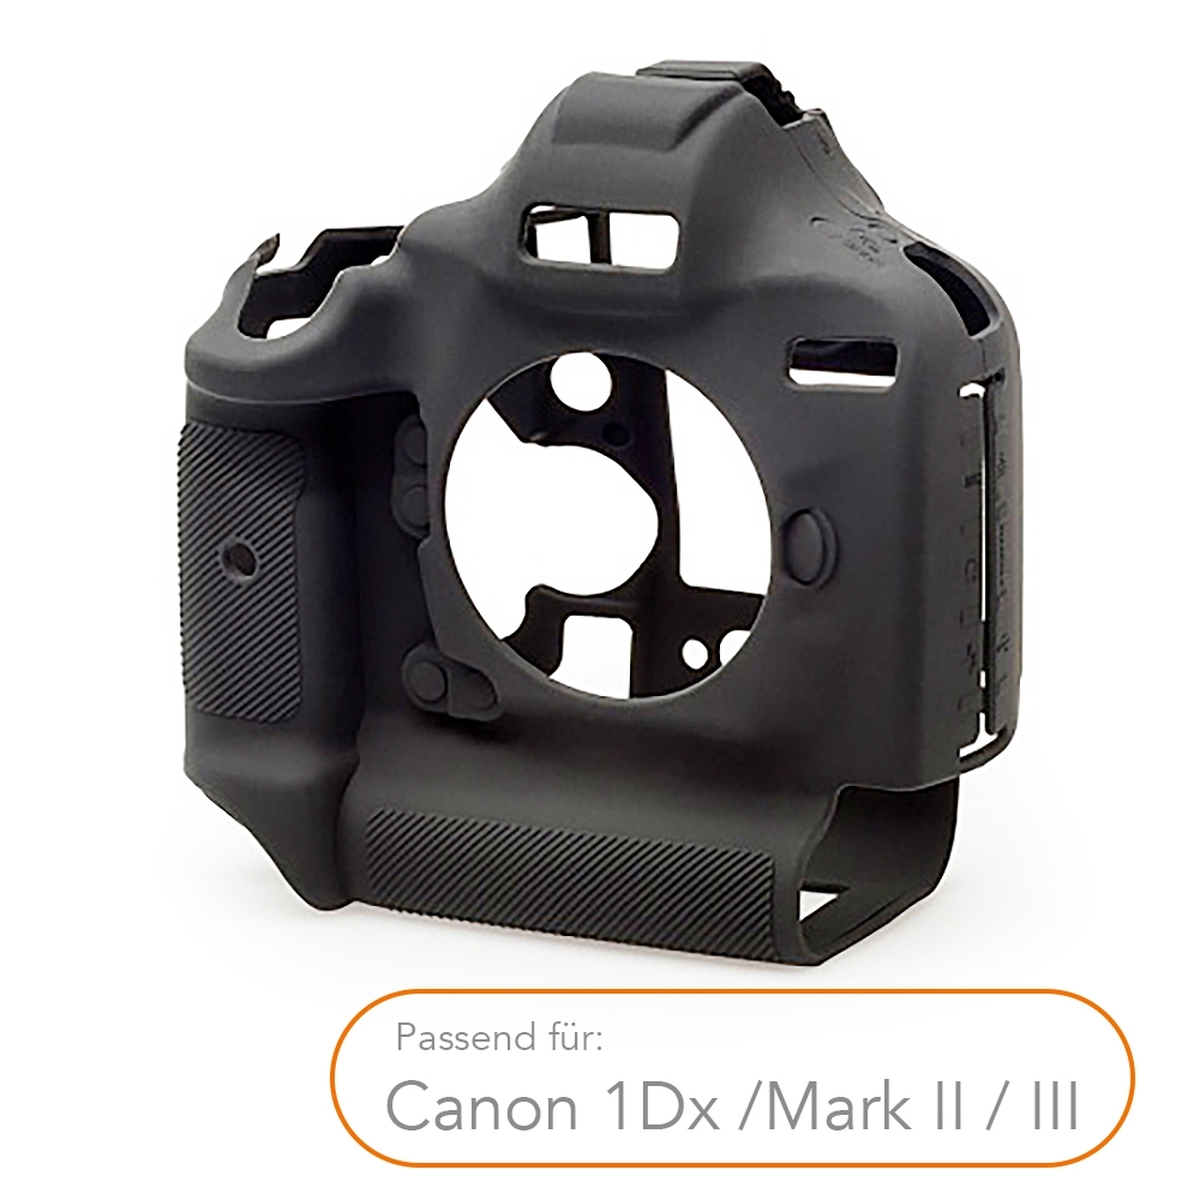 Walimex pro easyCover pour Canon 1Dx /Mark II / III